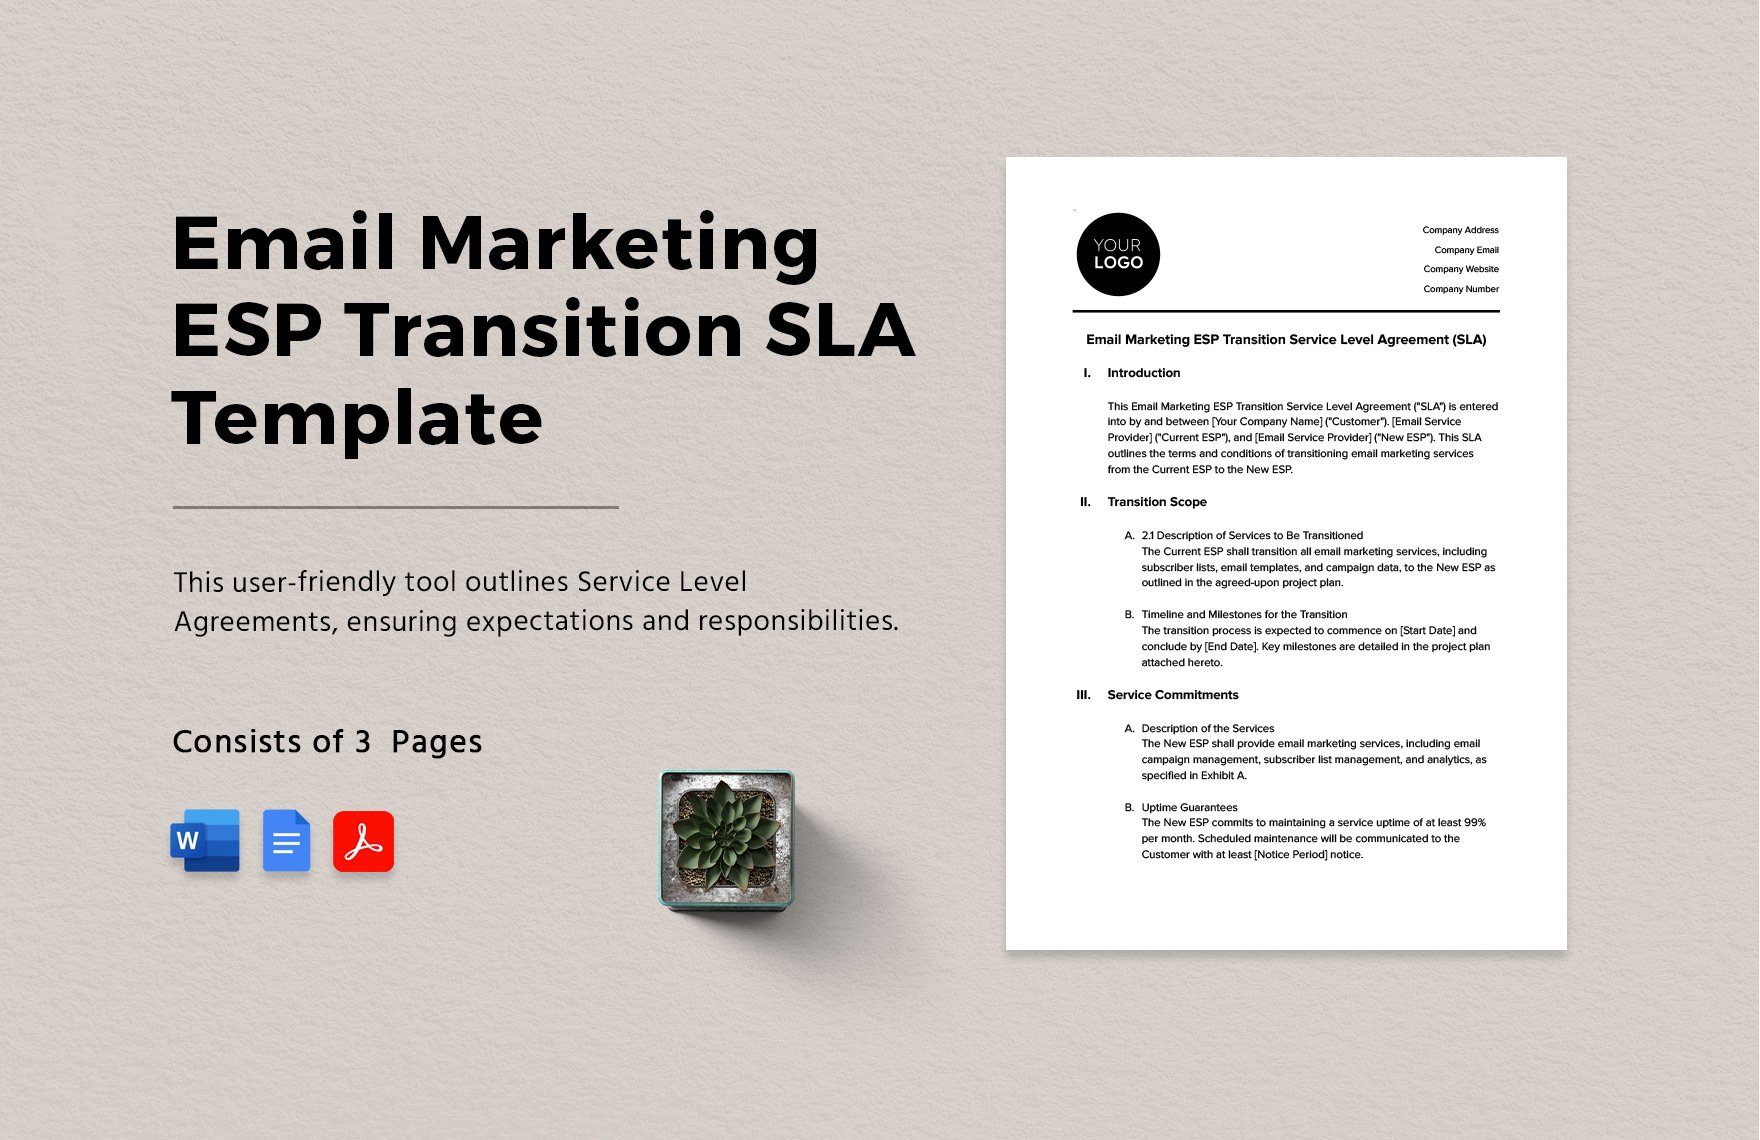 Email Marketing ESP Transition SLA Template